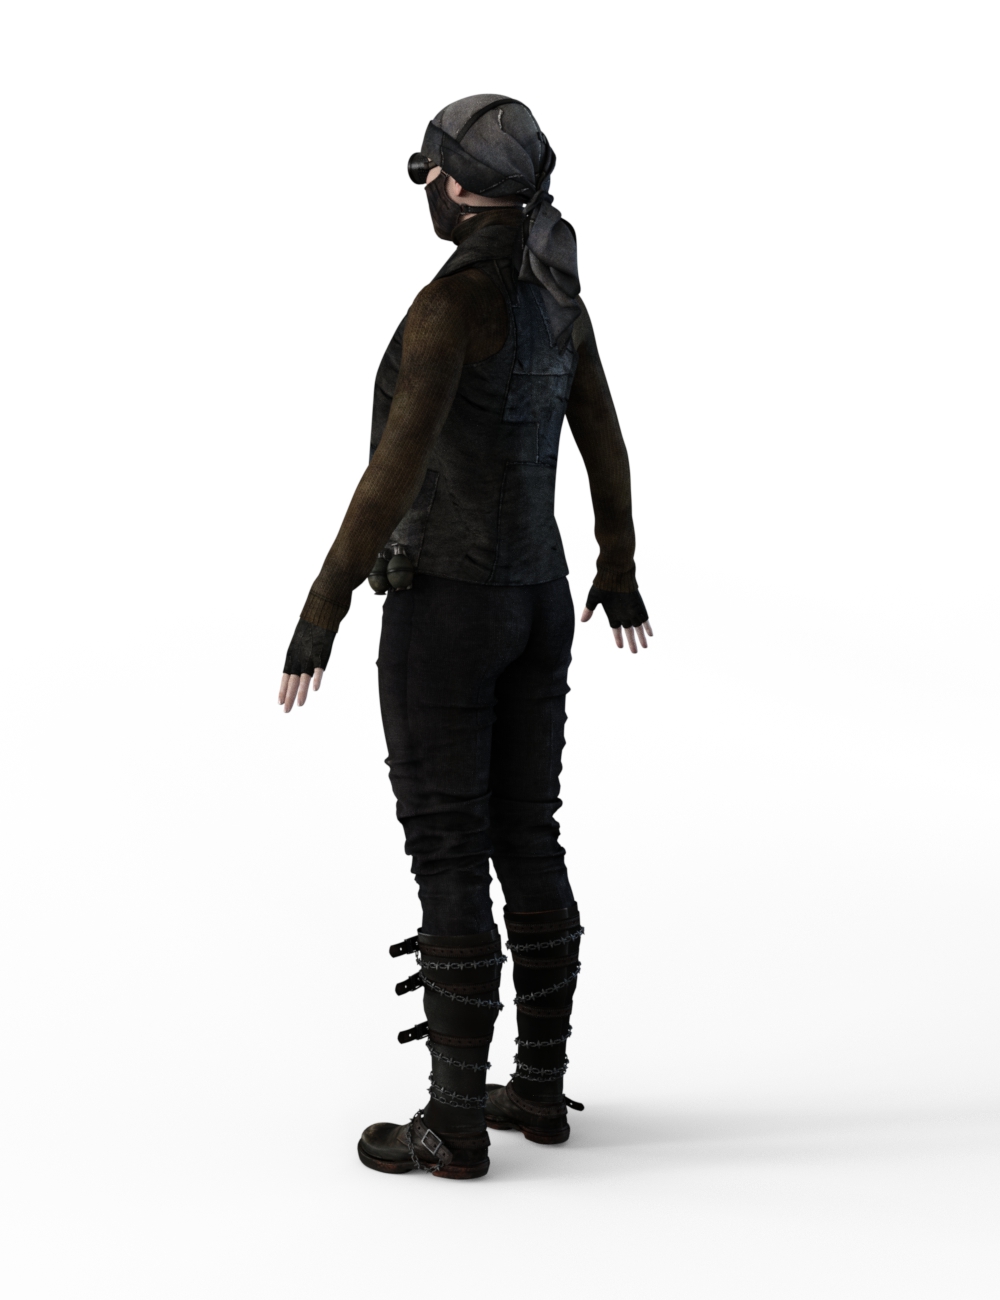 FBX- Base Female Rough Rider by: Paleo, 3D Models by Daz 3D